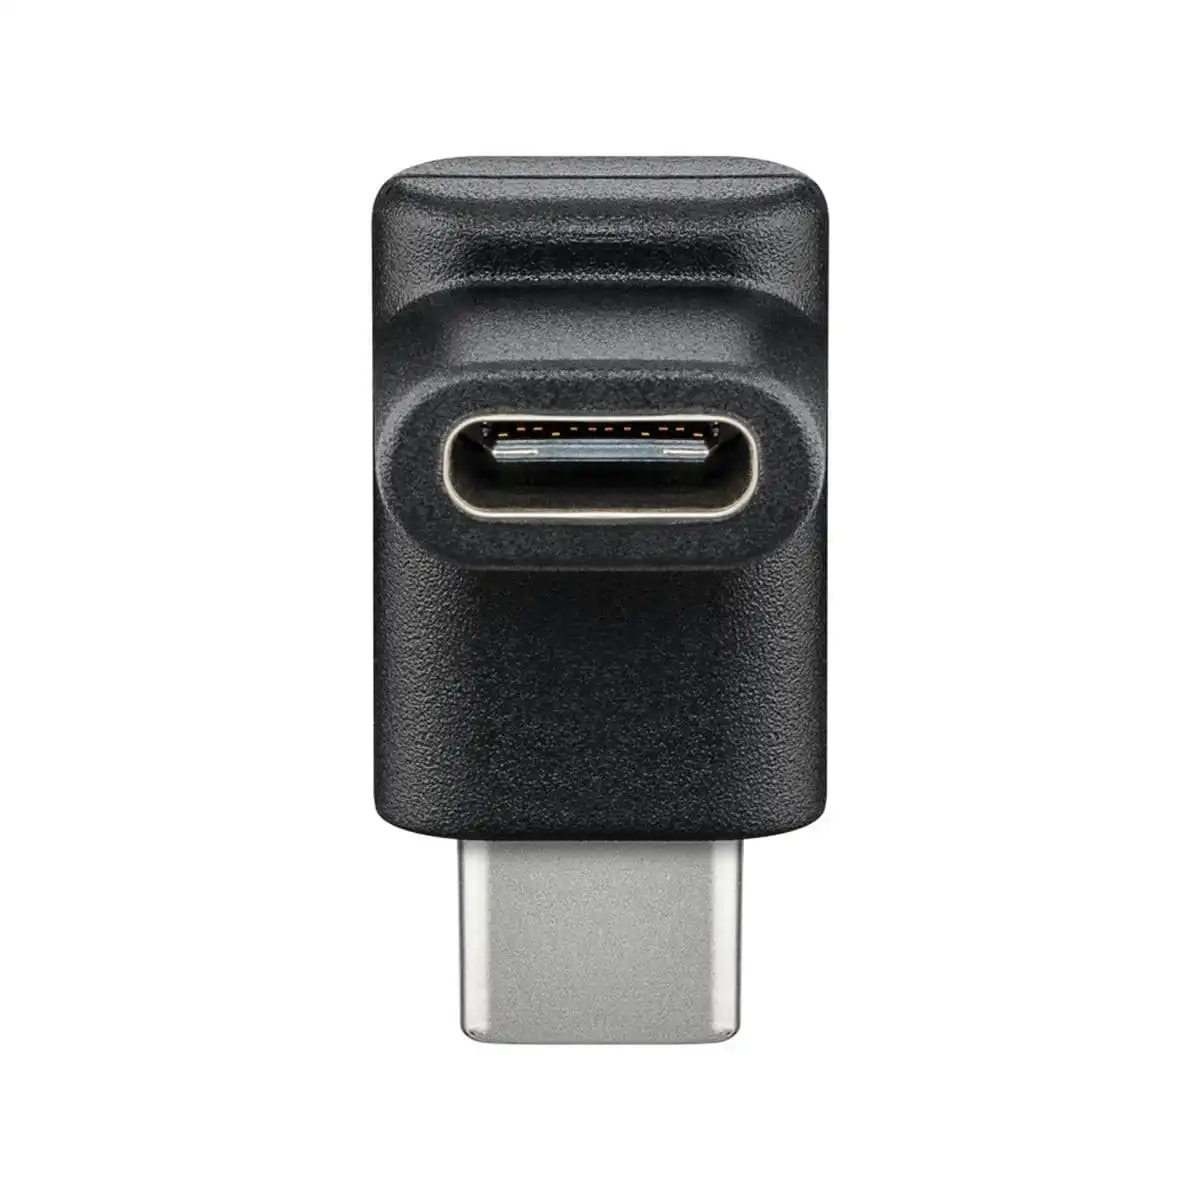 Goobay USB-C to USB-C Adapter 90 degree plug for USB-C cables - Black